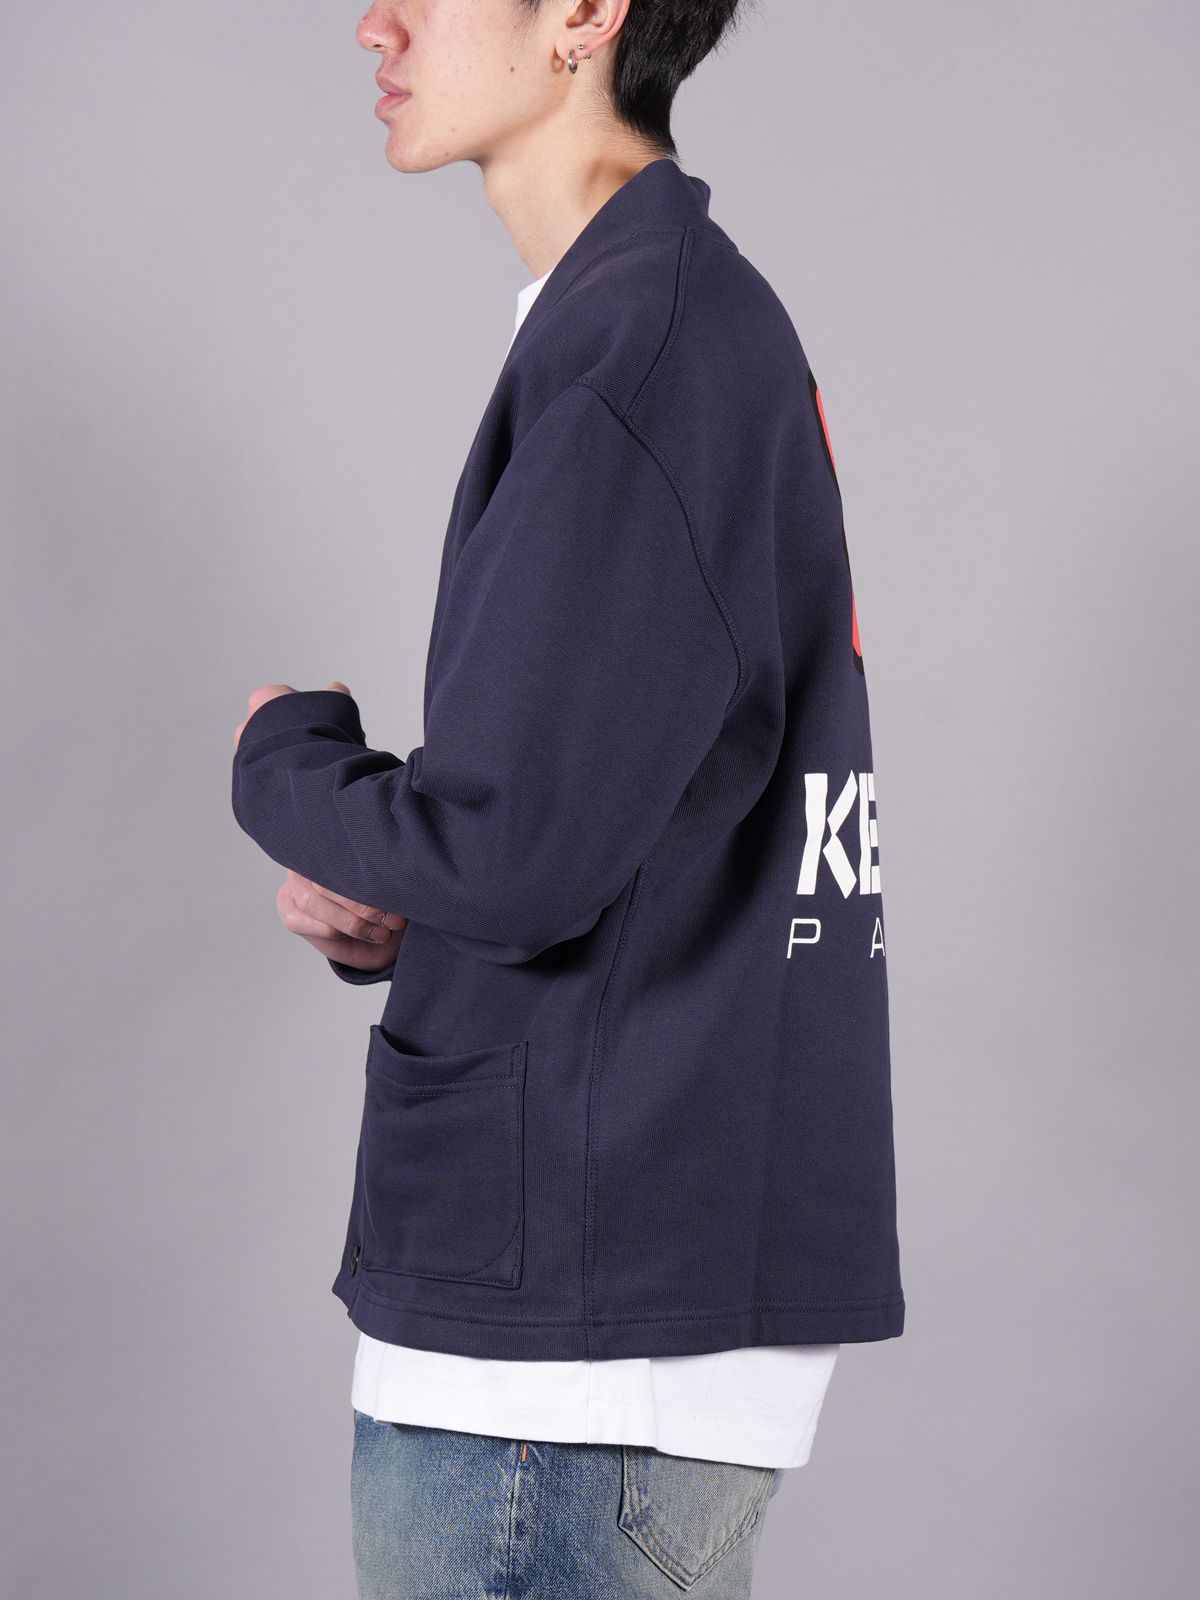 KENZO - Boke Flower Jersey Cardigan / ボケフラワー カーディガン 